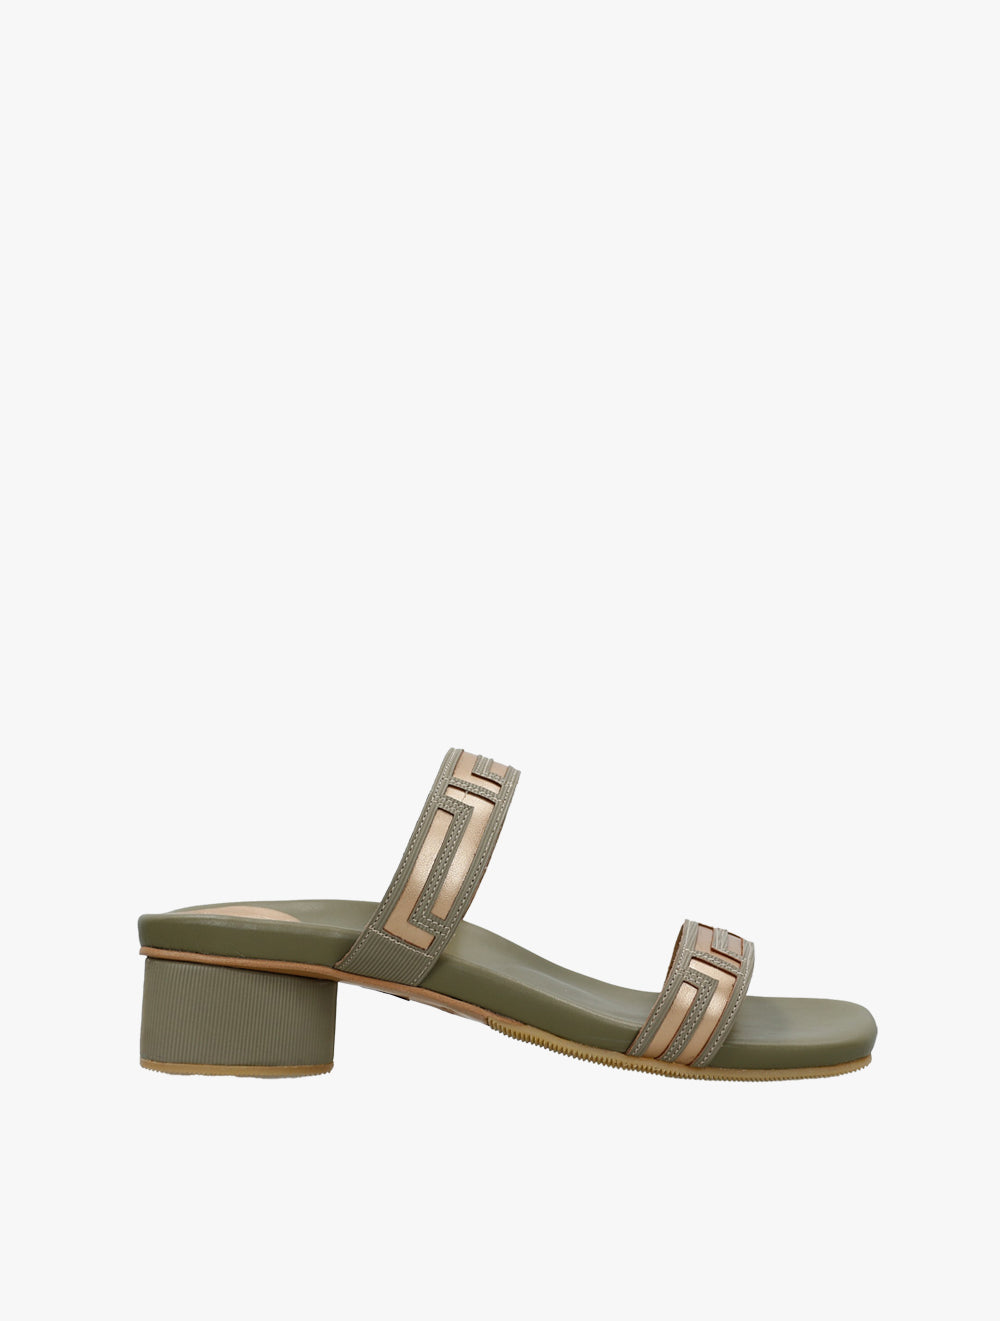 WIMO
Orthopaedic - Burch Sage Green Light Gold sandal